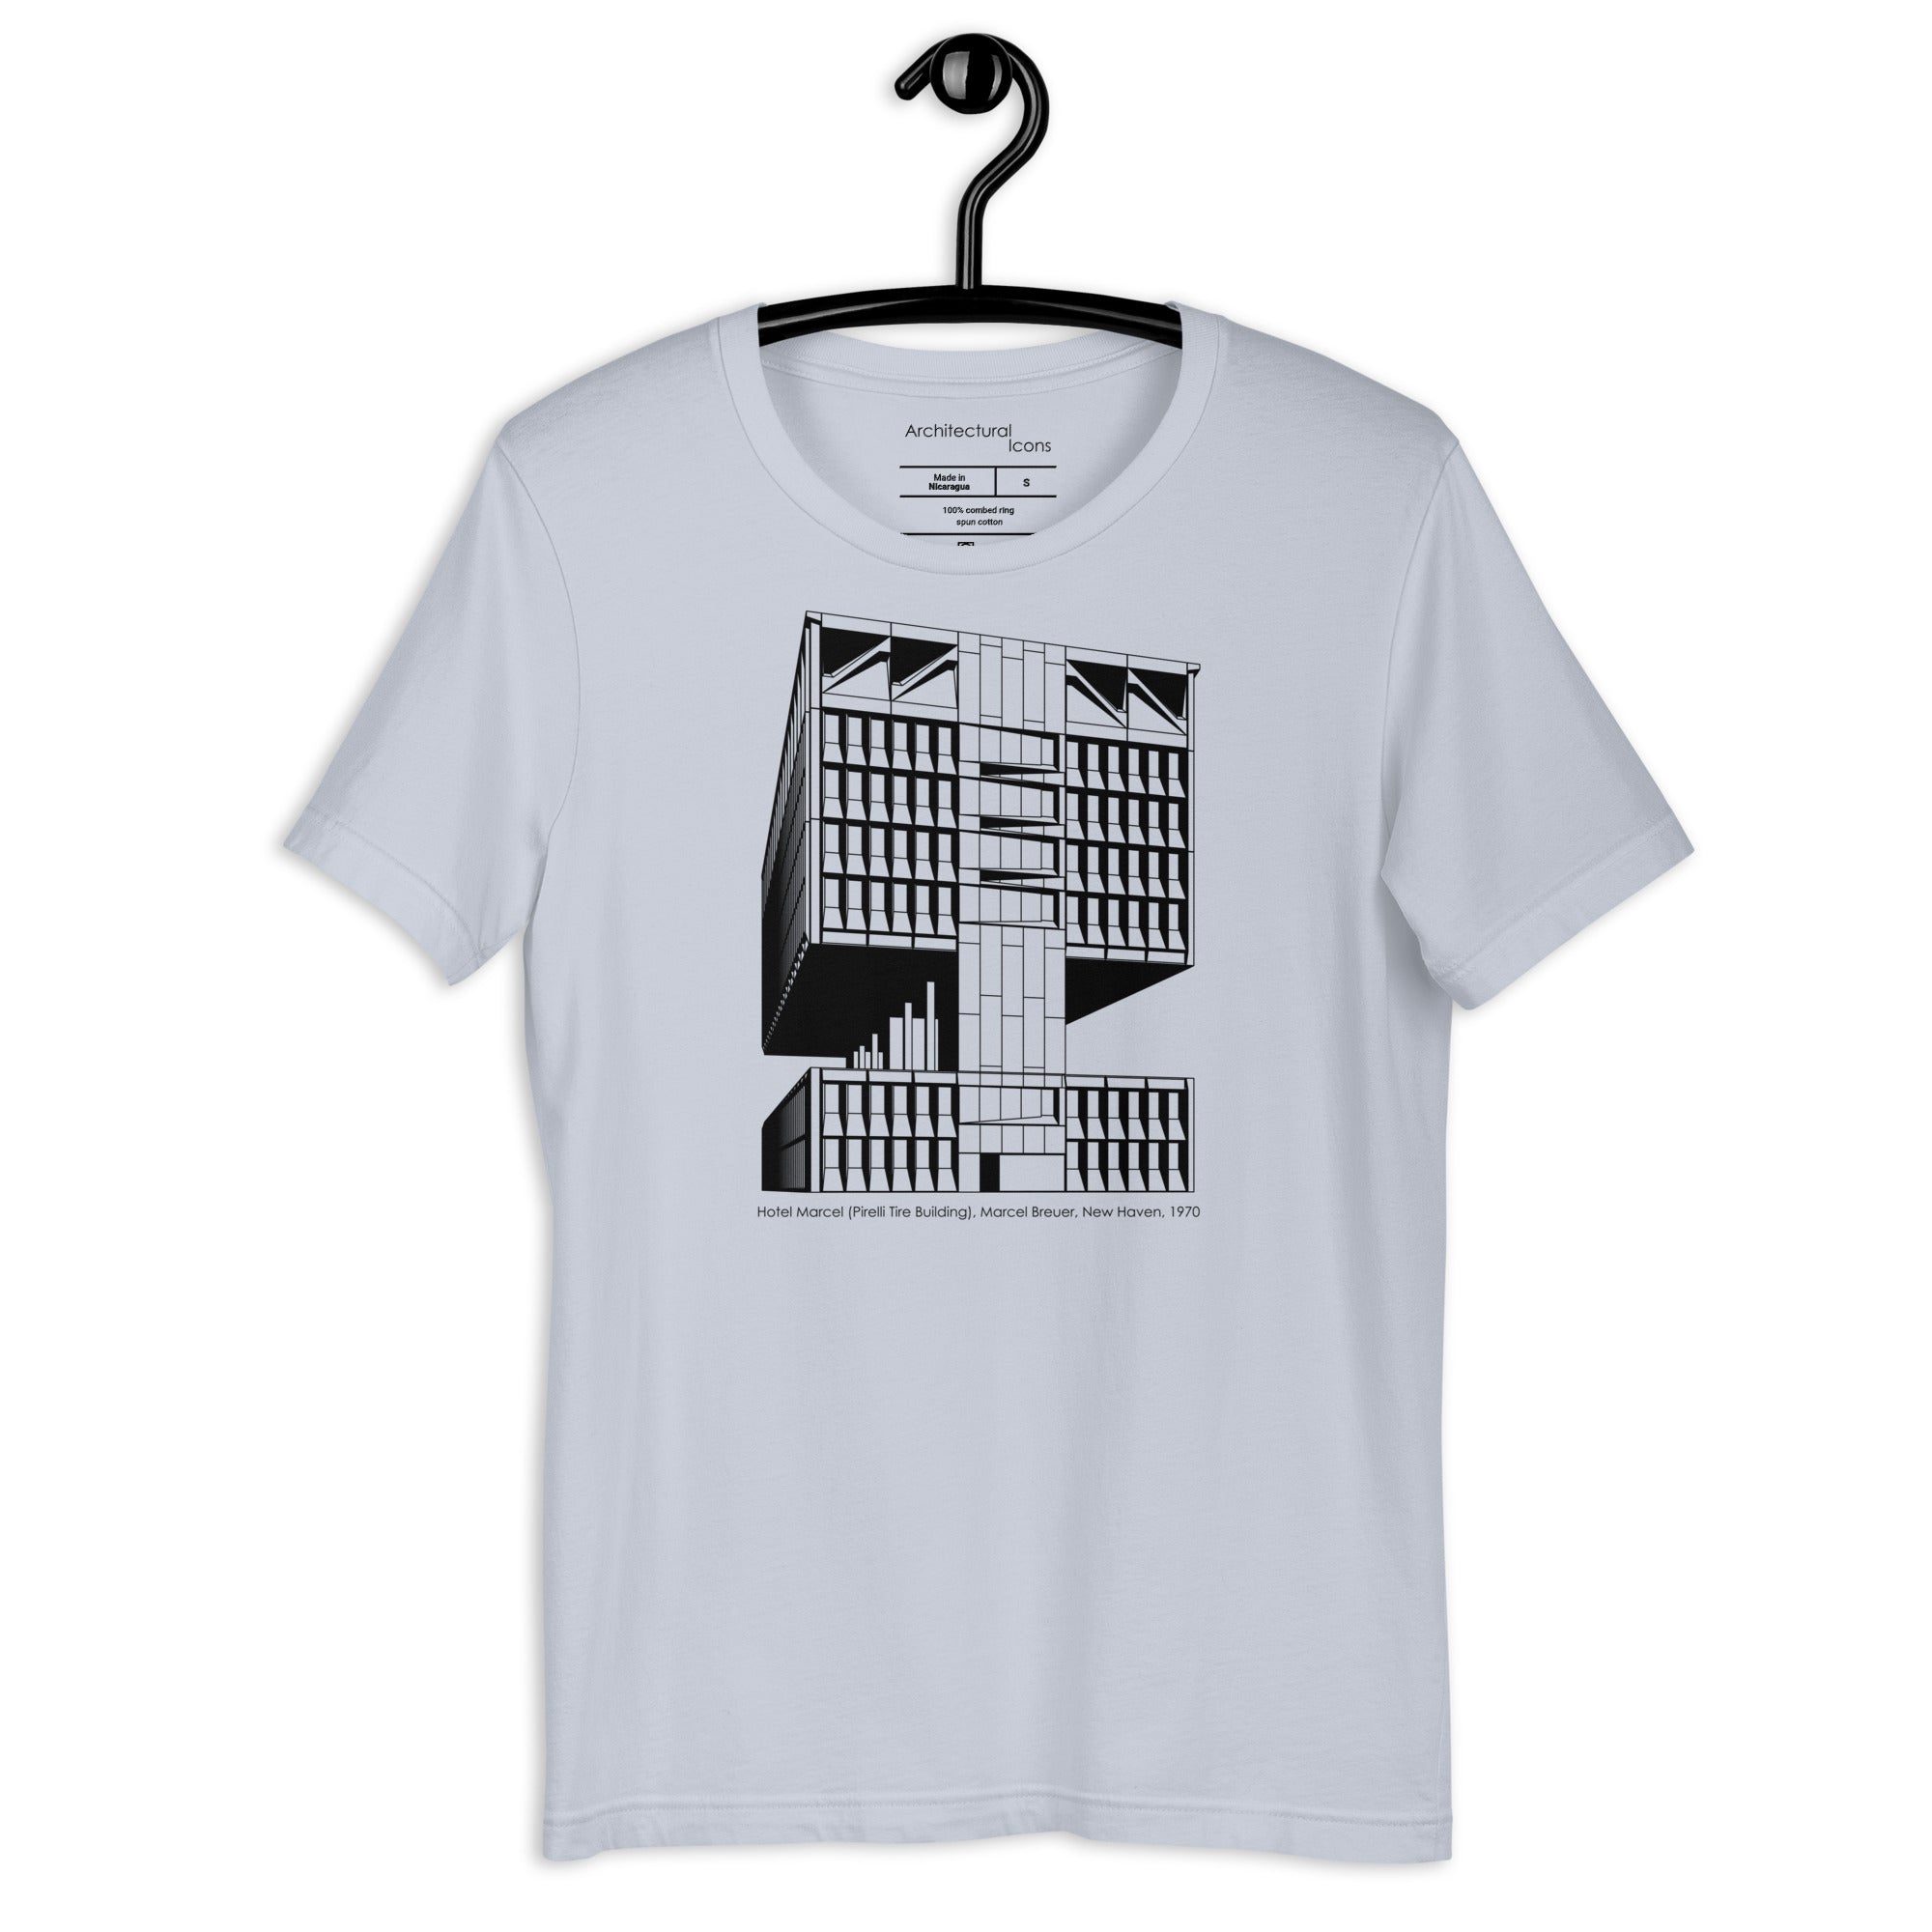 Hotel Marcel (Pirelli Tire Building) Unisex t-shirt